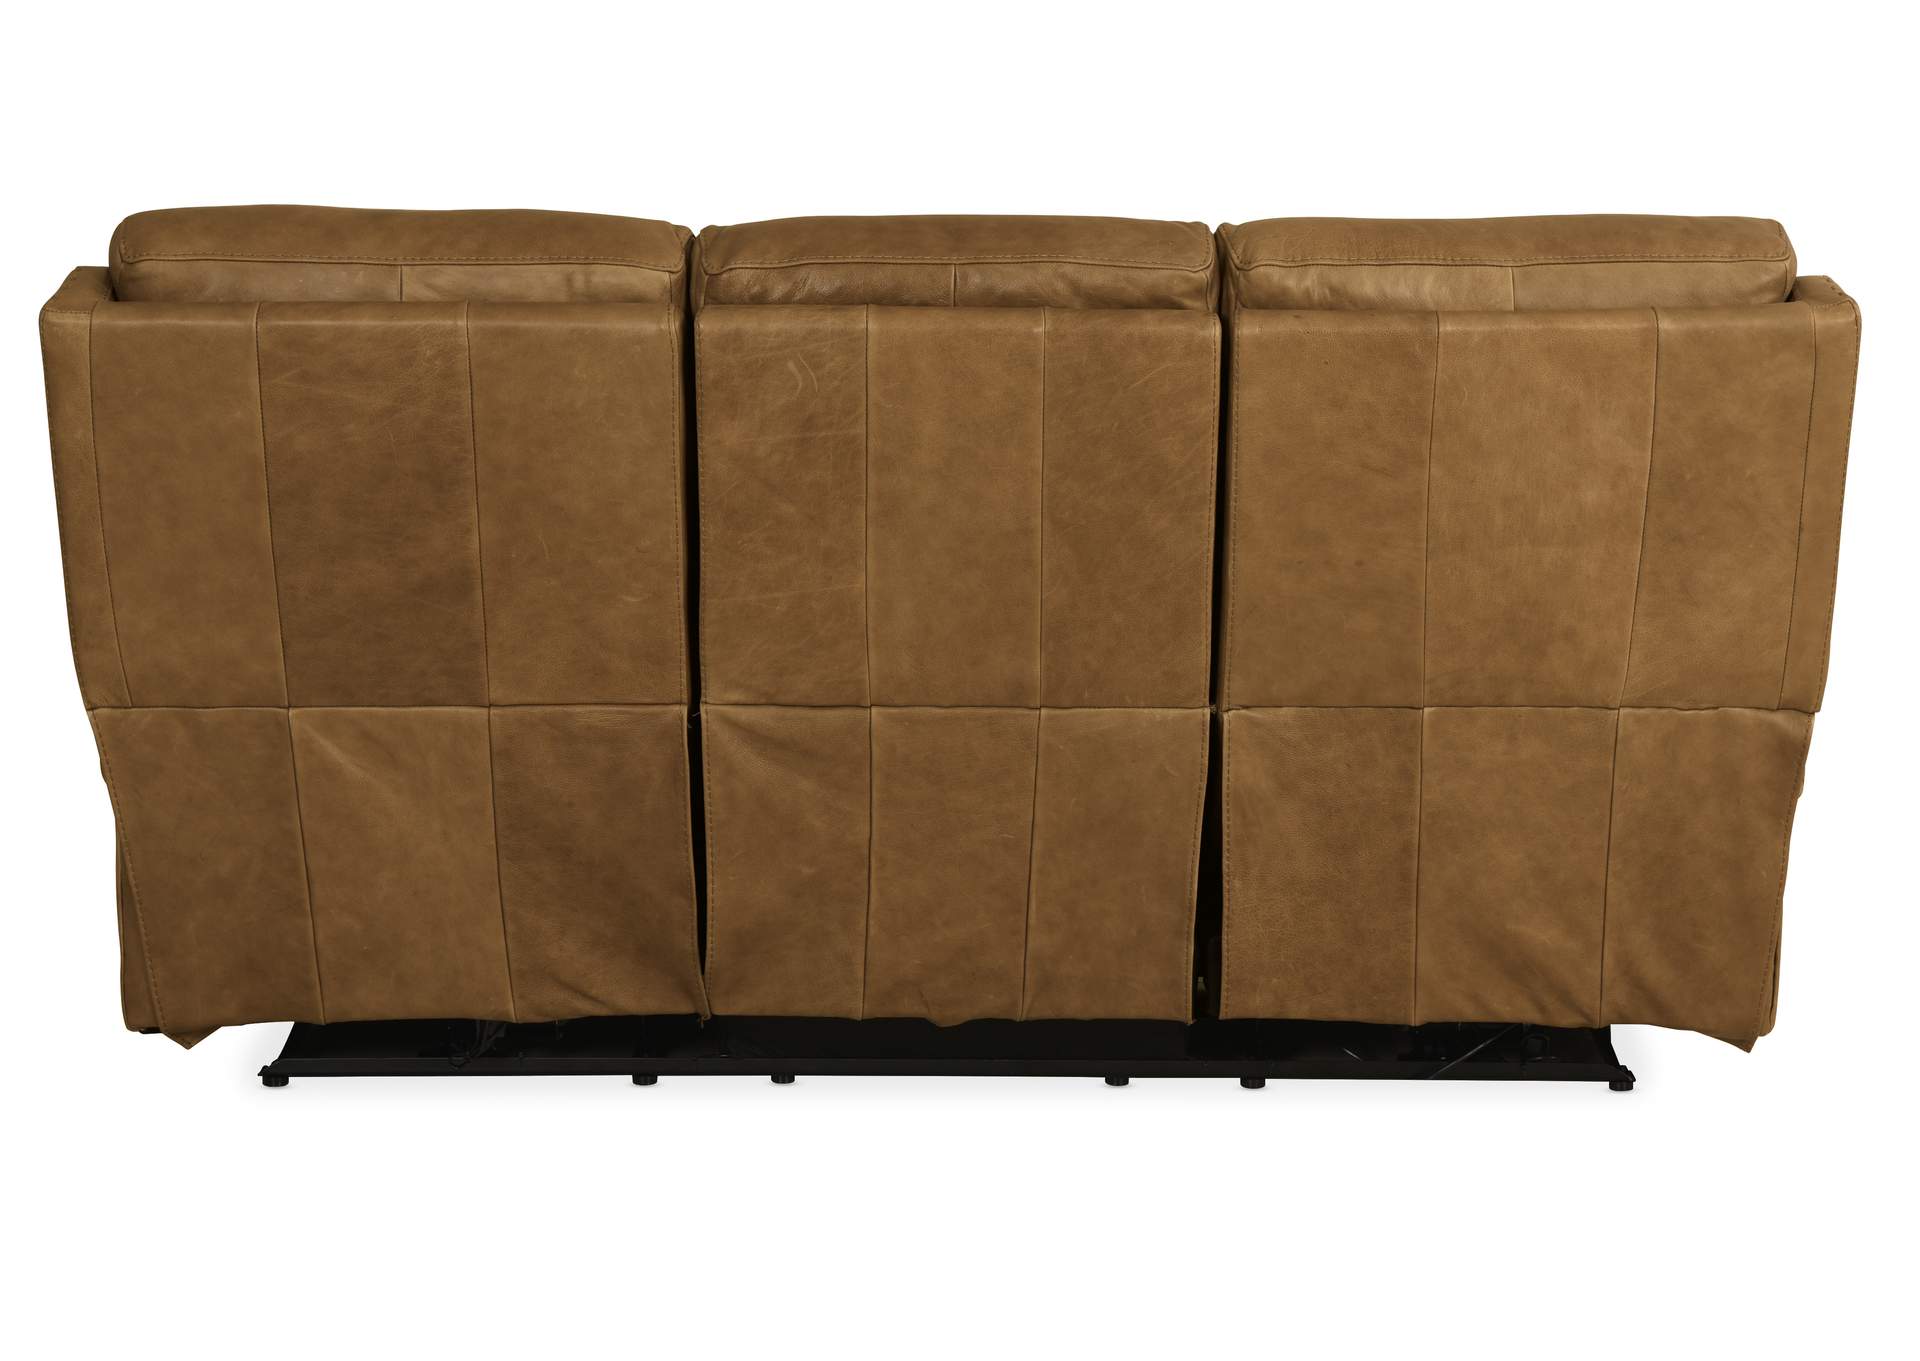 Poise Power Recliner Sofa W - Power Headrest,Hooker Furniture